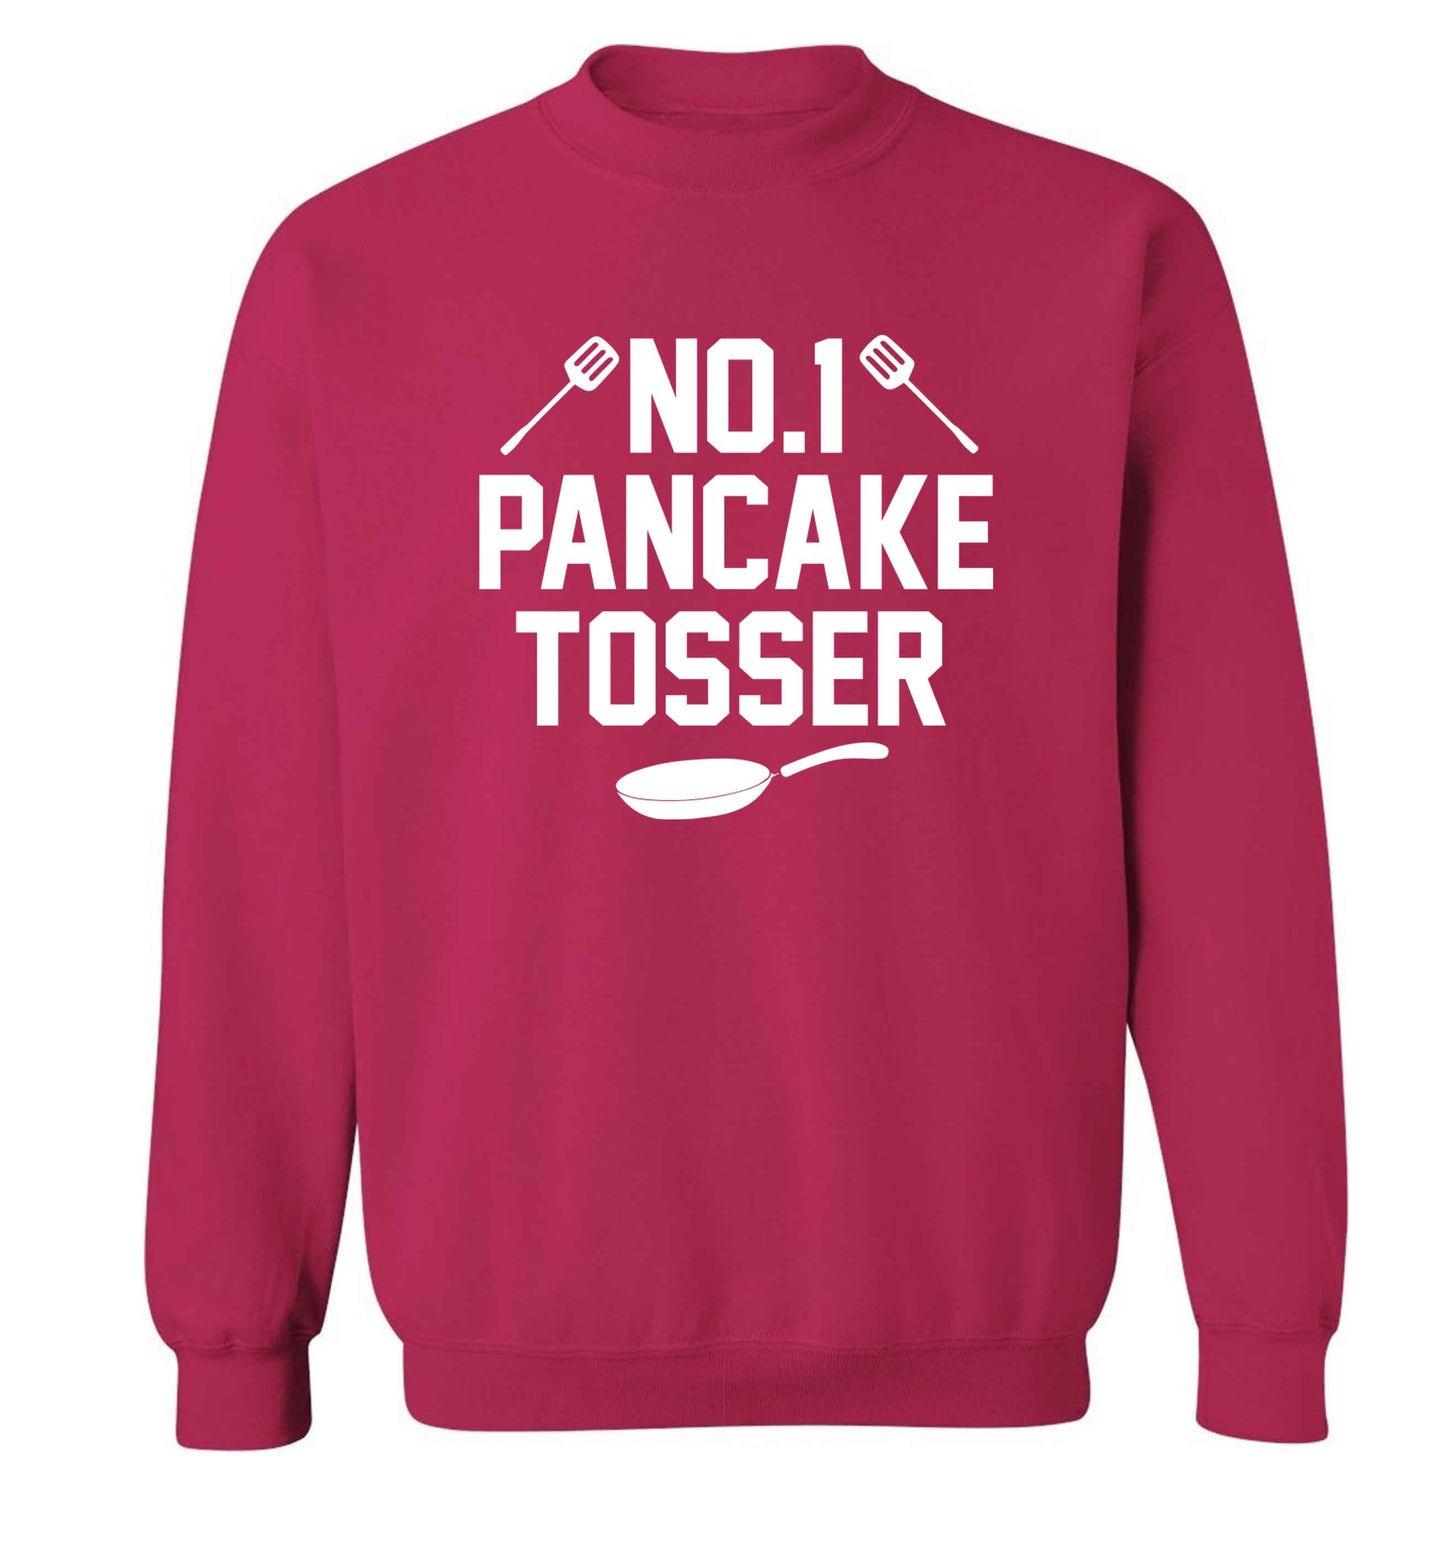 No.1 Pancake tosser adult's unisex pink sweater 2XL